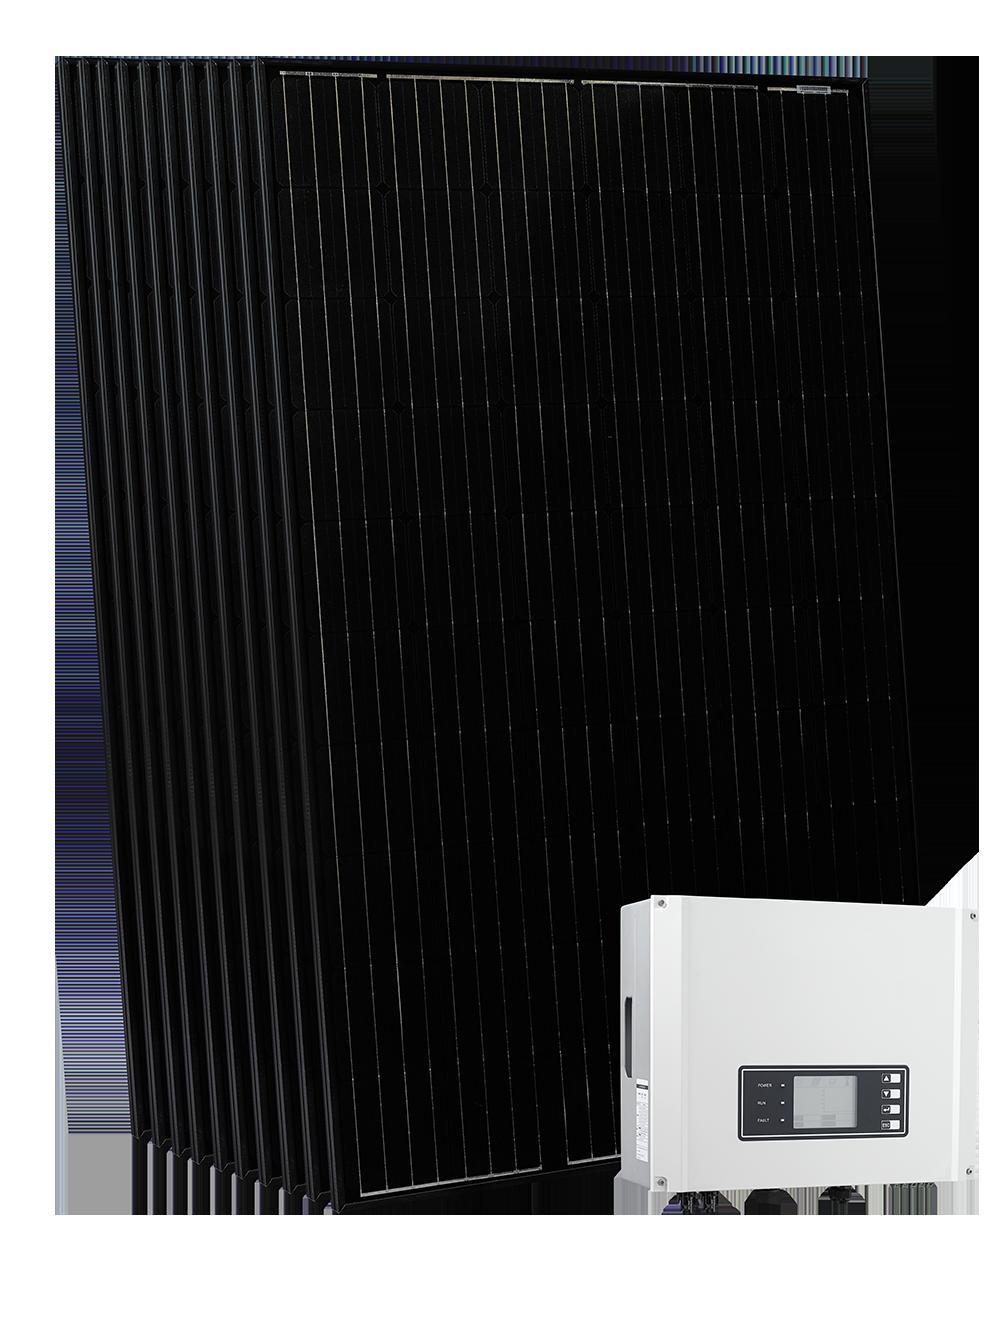 Solcellspaketen kan enkelt kompletteras med fler solpaneler för en optimal takanpassning. NIBE PV består av monokristallina kiselcellspaneler av PERC-teknik med en effekt av 300 Wp.